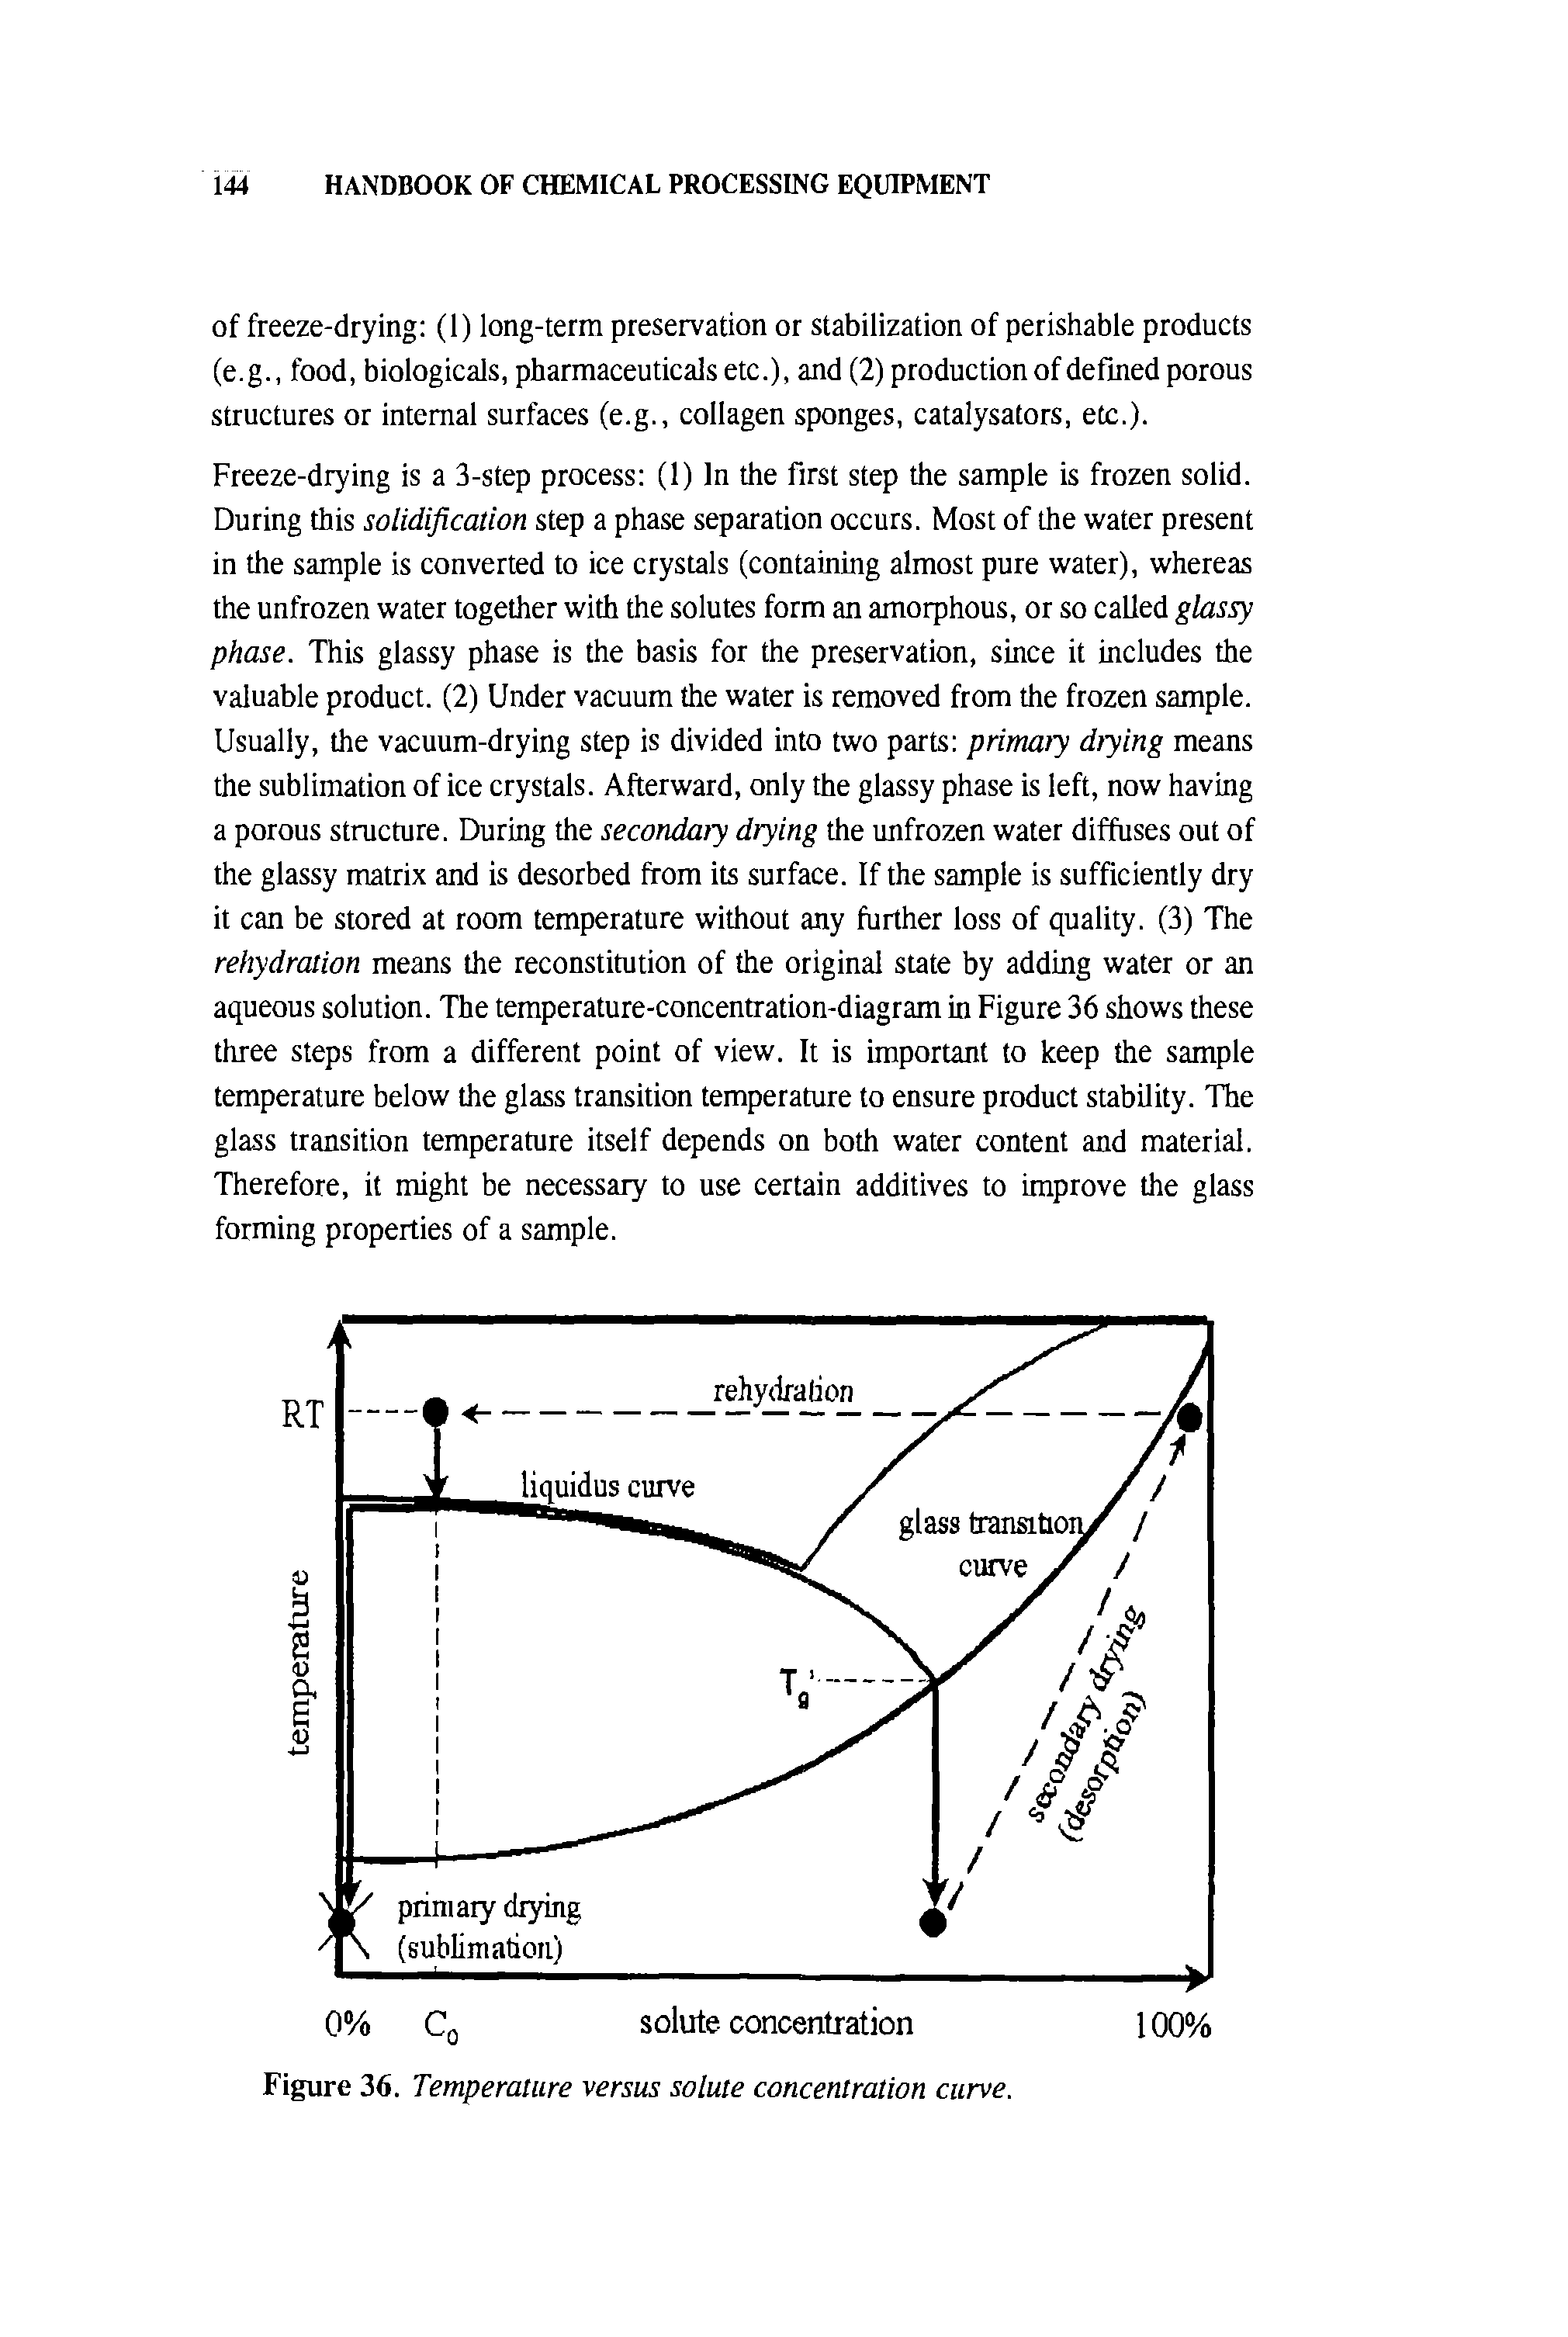 Figure 36. Temperature versus solute concentration curve.